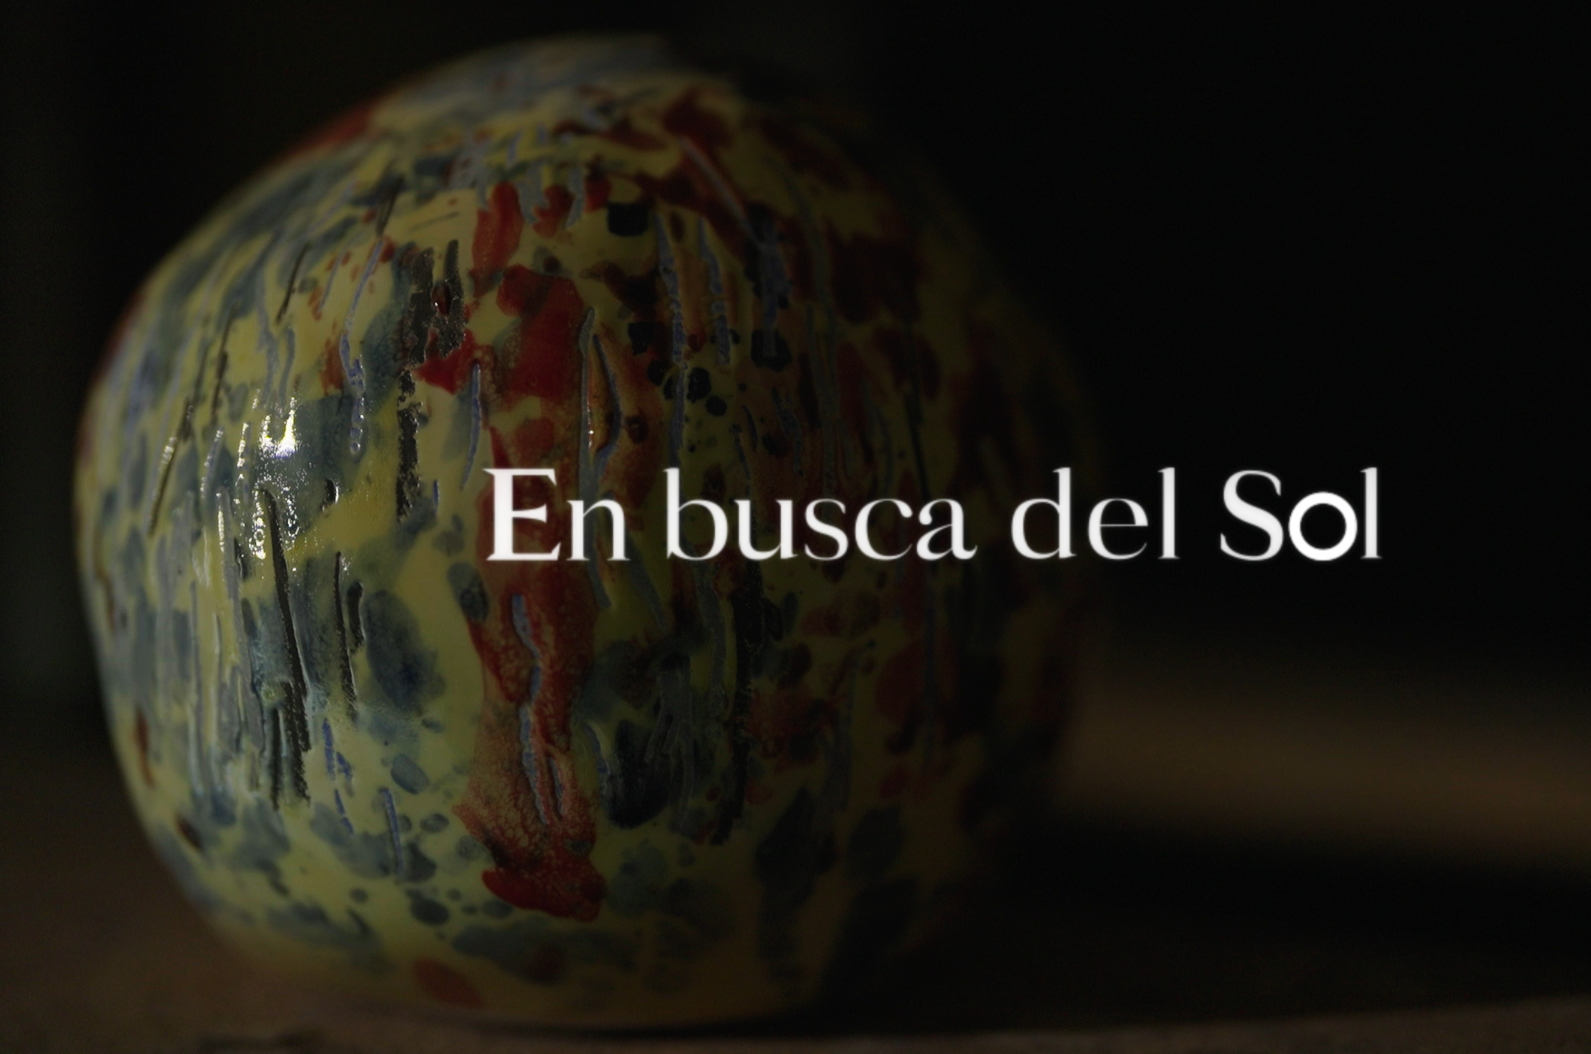 A série documental ‘En busca del Sol’ chega à Movistar Plus+ no dia 27 de Março.